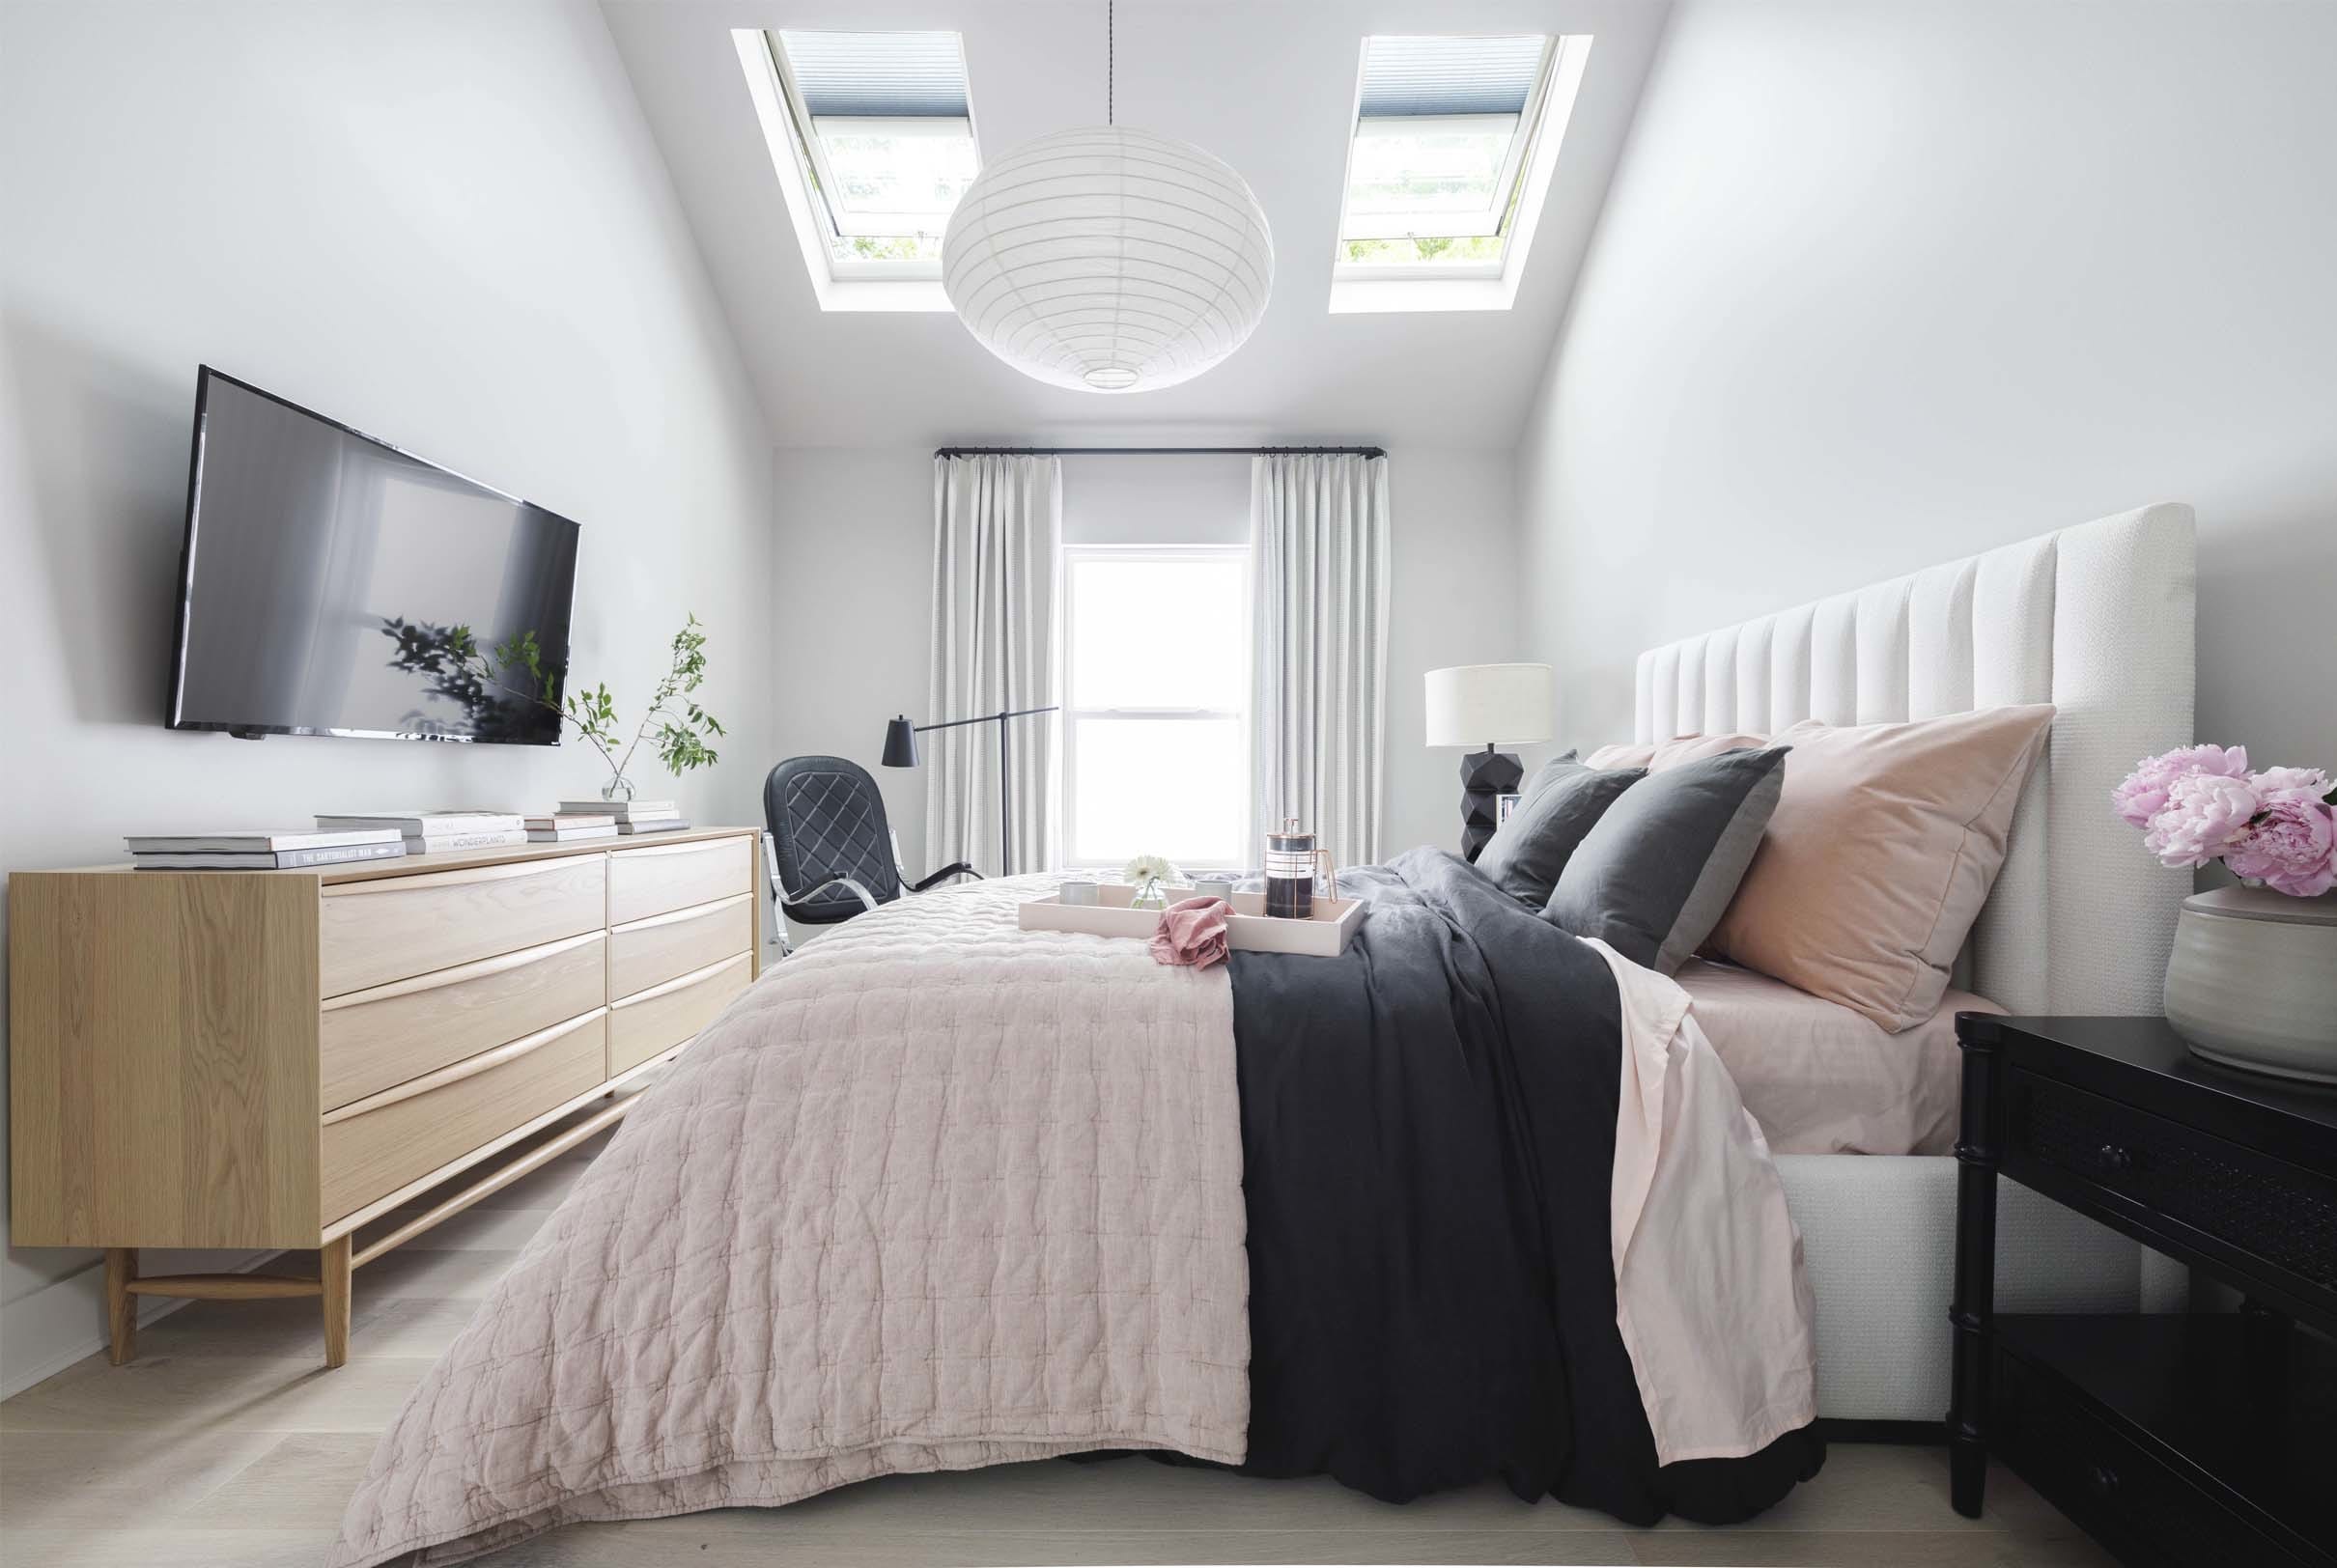 Bedroom pink comforter grey pillows skylights